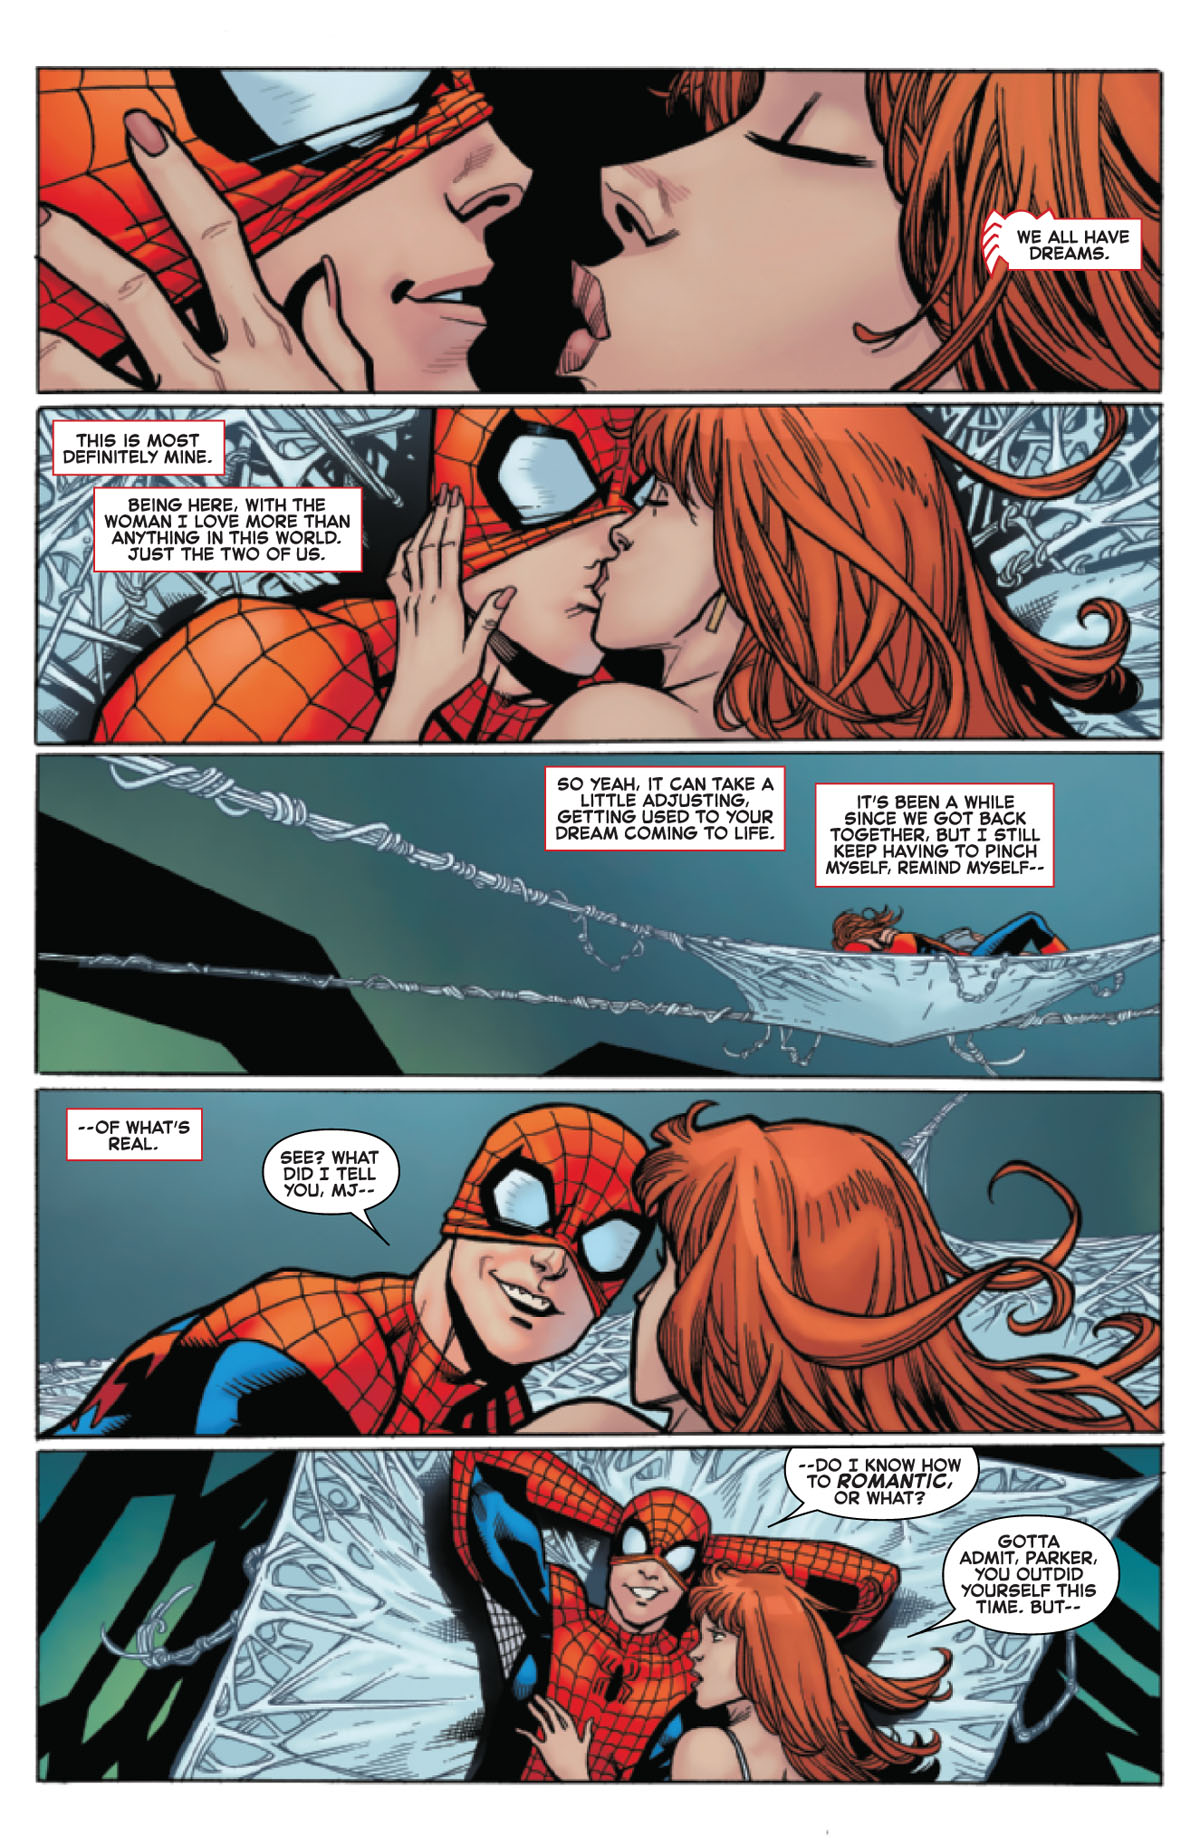 Amazing Spider-Man #24 page 1